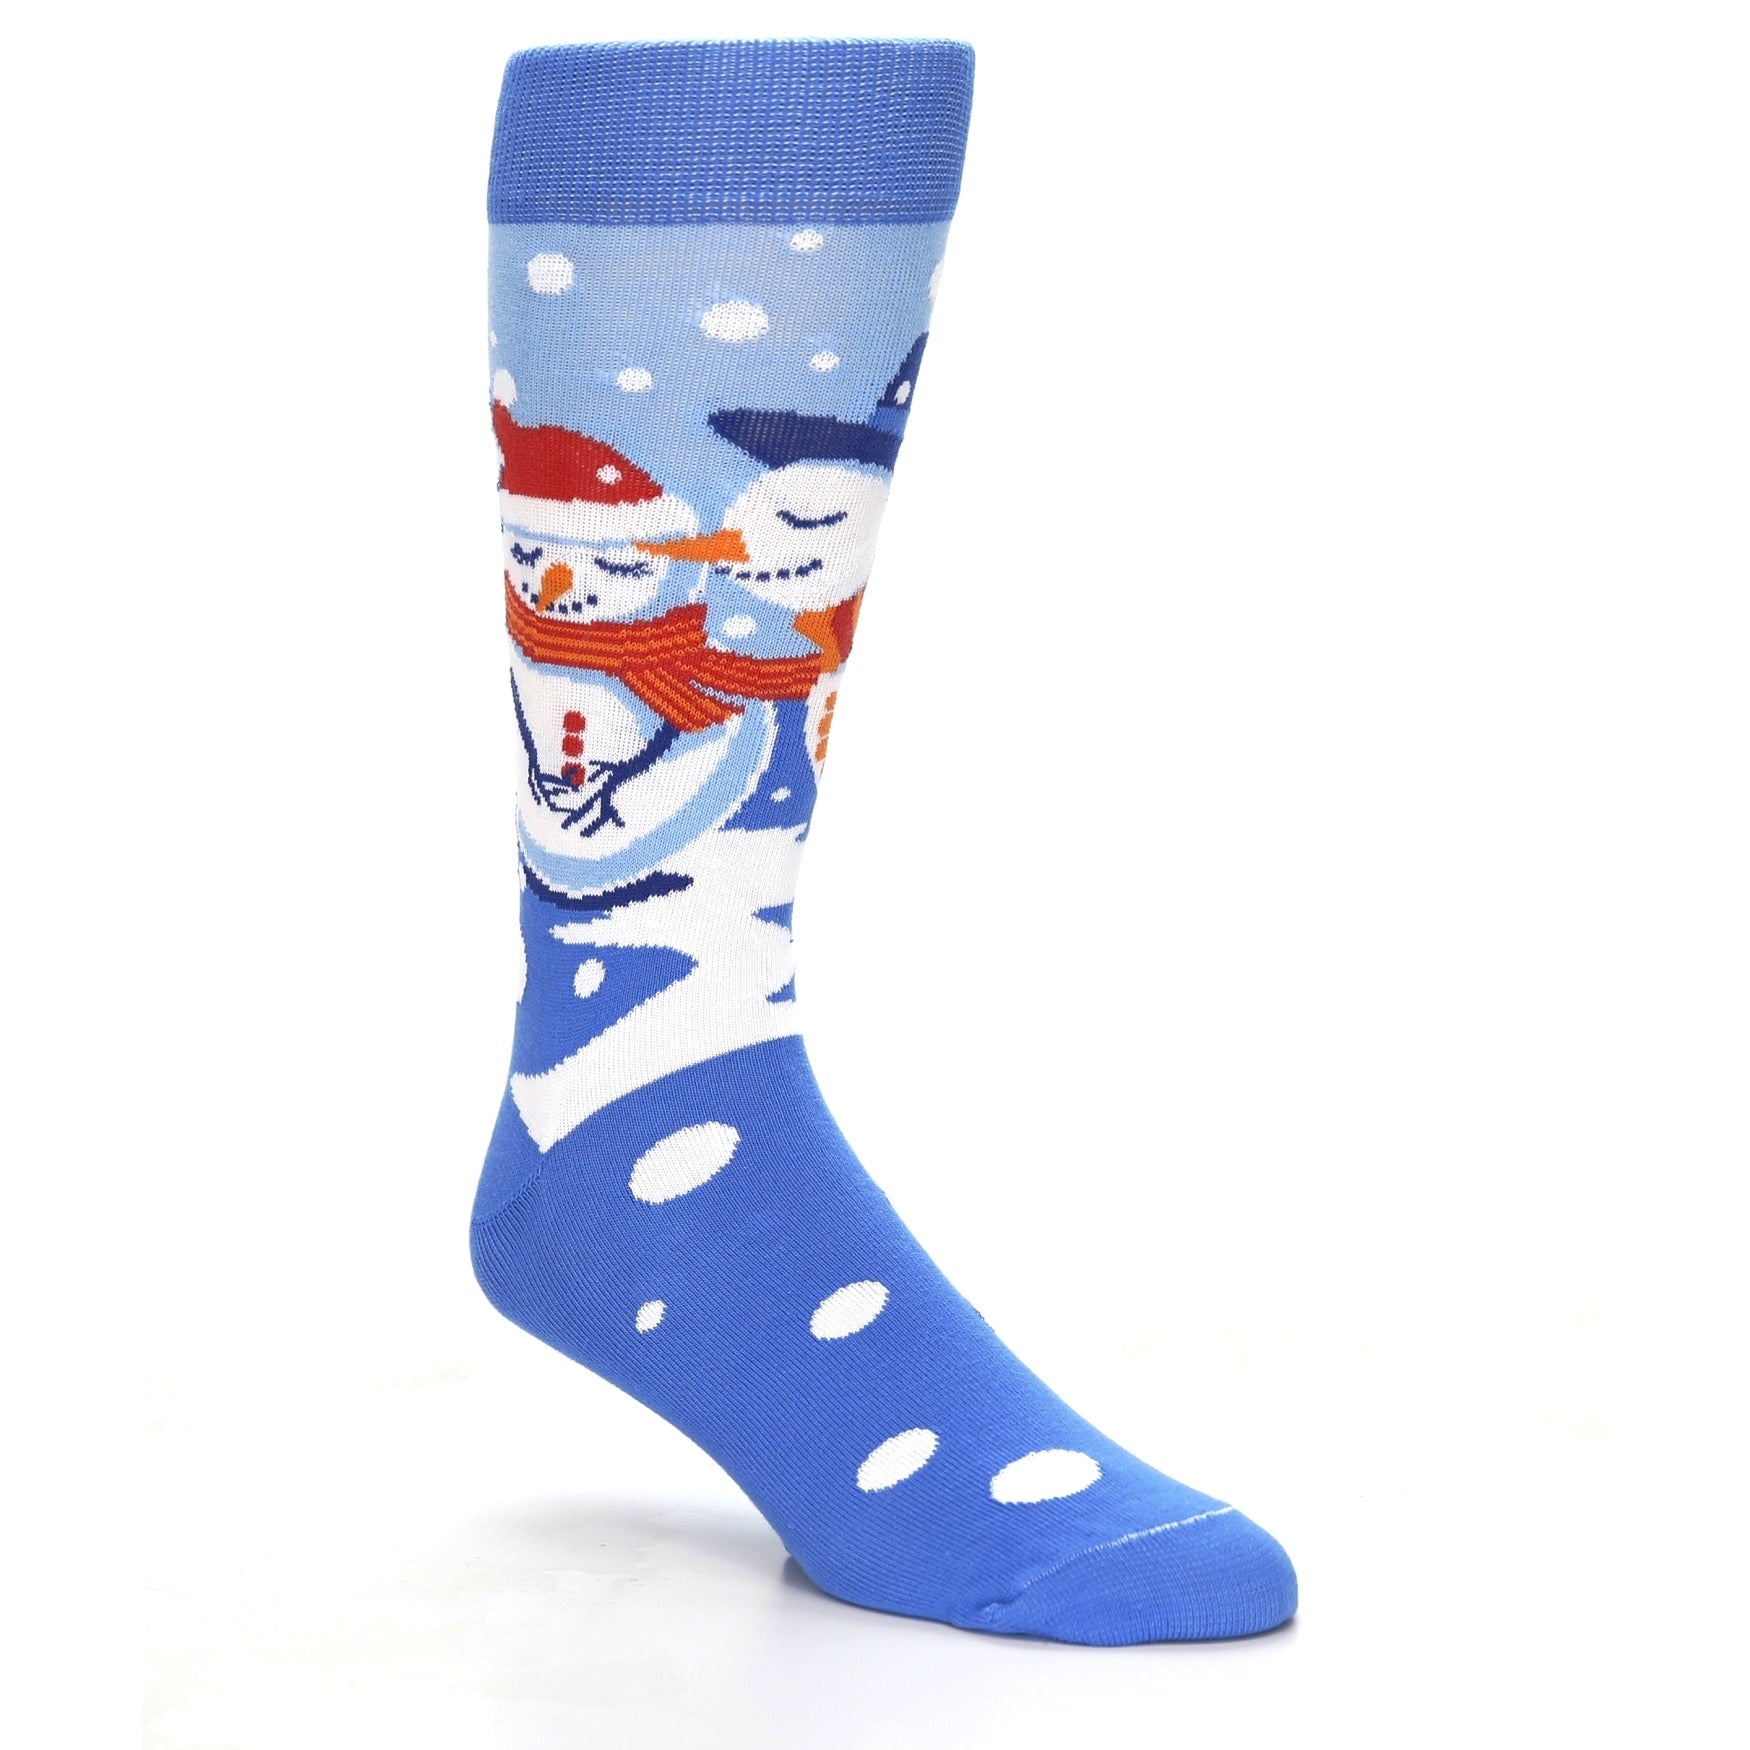 Love at Frost Sight - USA Made Men's Dress Socks